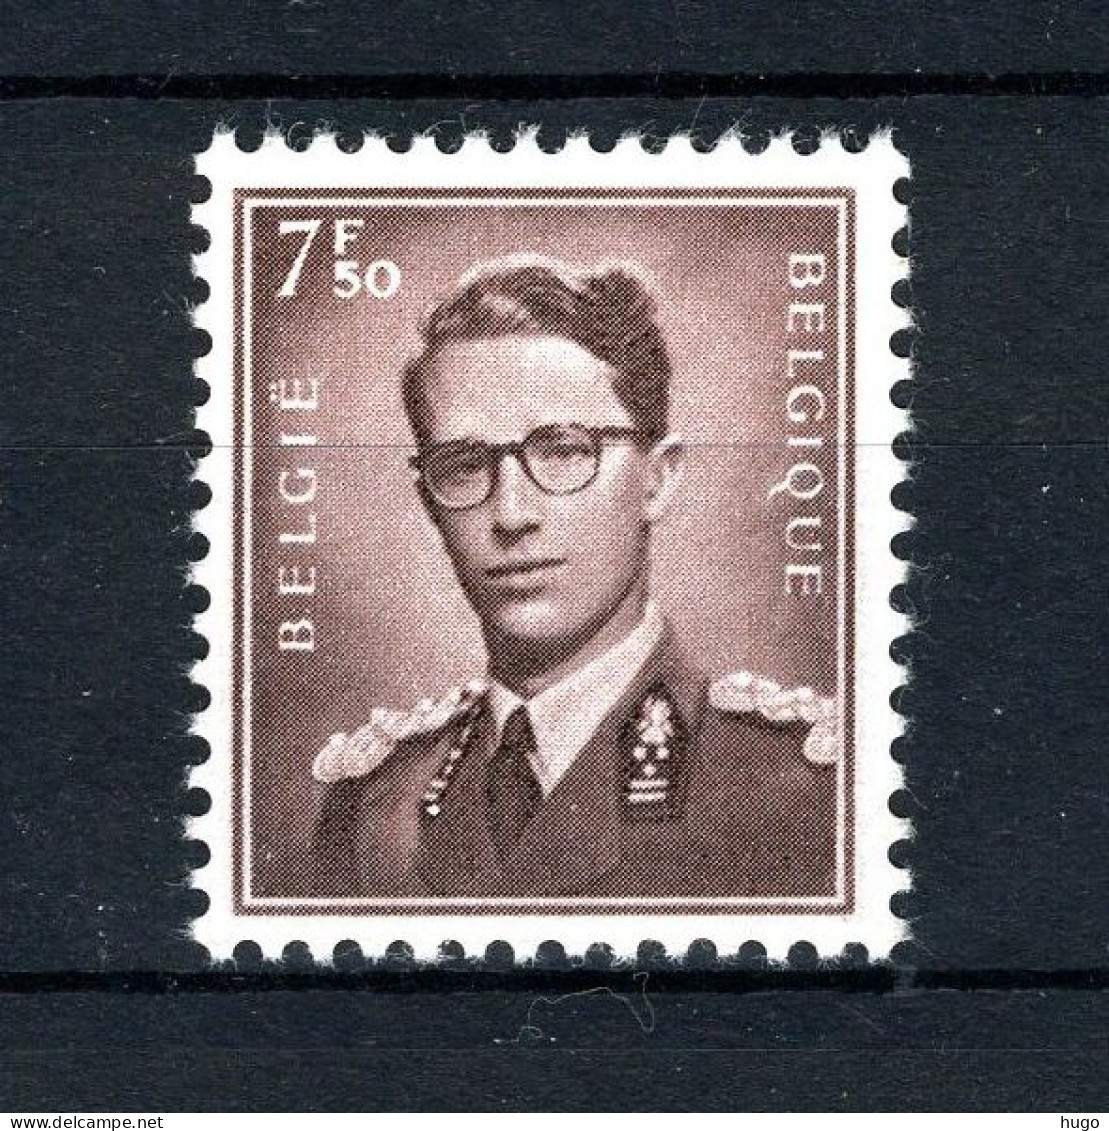 1070 MNH 1957-1960 - Z.M. Koning Boudewijn. - Nuevos